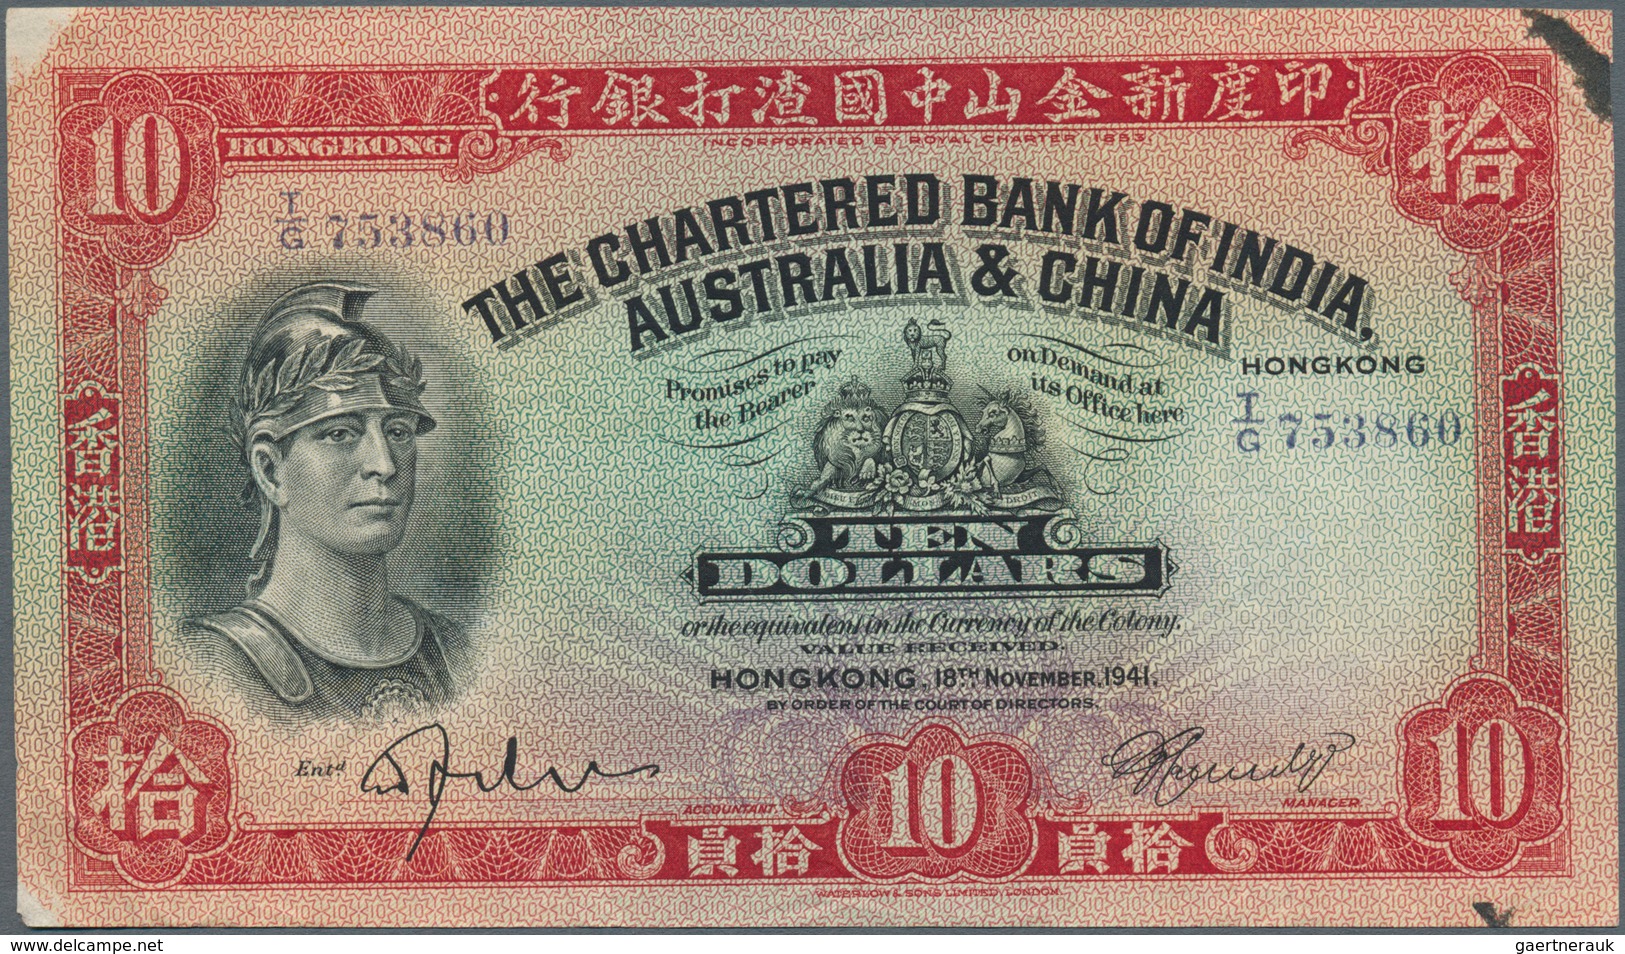 01675 Hong Kong: 10 Dollars 1941 P. 55, Used With Folds, Paper Abrasion At Upper Left Corner, Ink Stain At - Hongkong